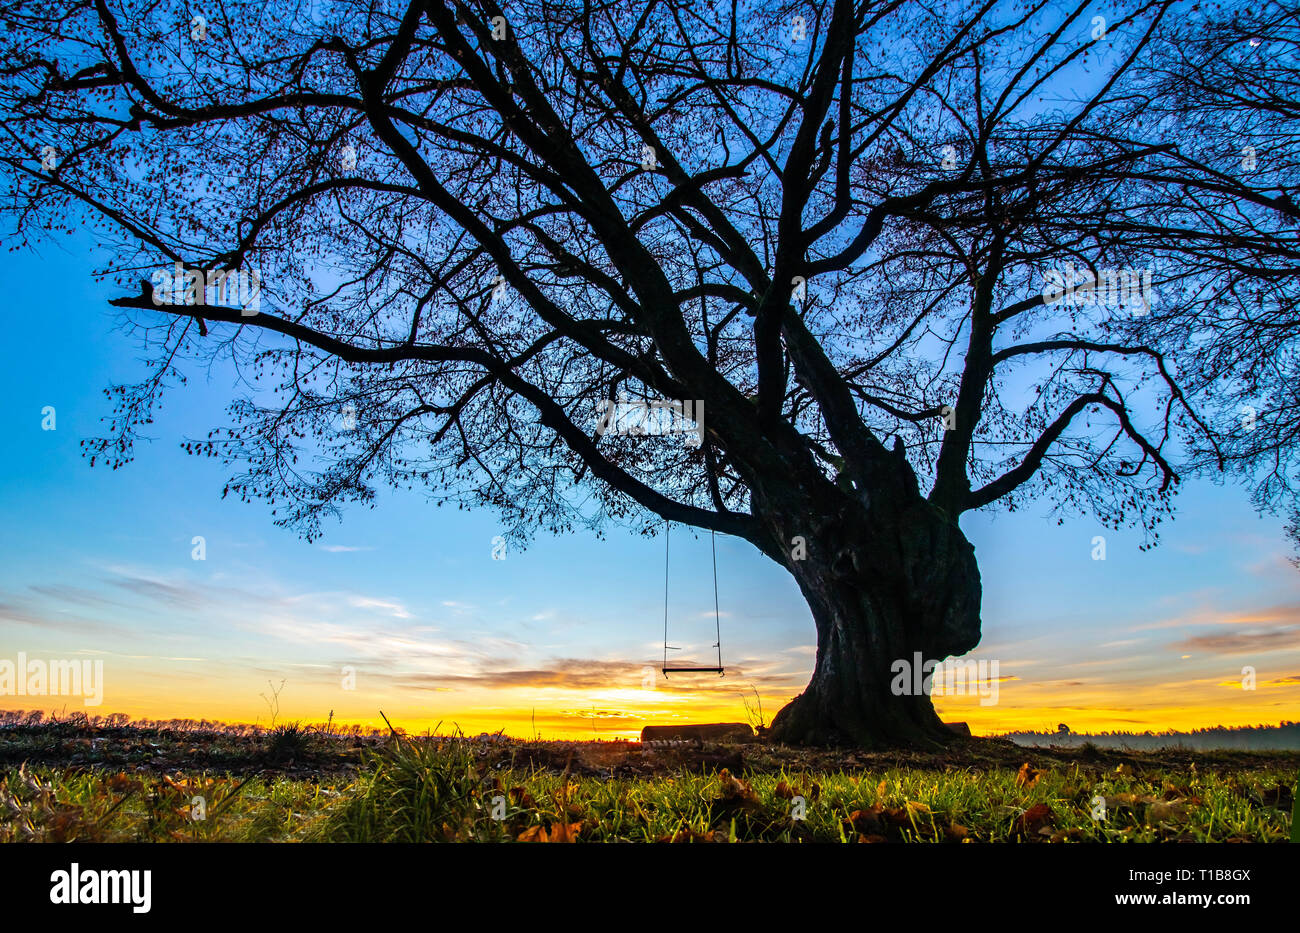 swing on mystic tree in sunrise, childhood memories Stock Photo